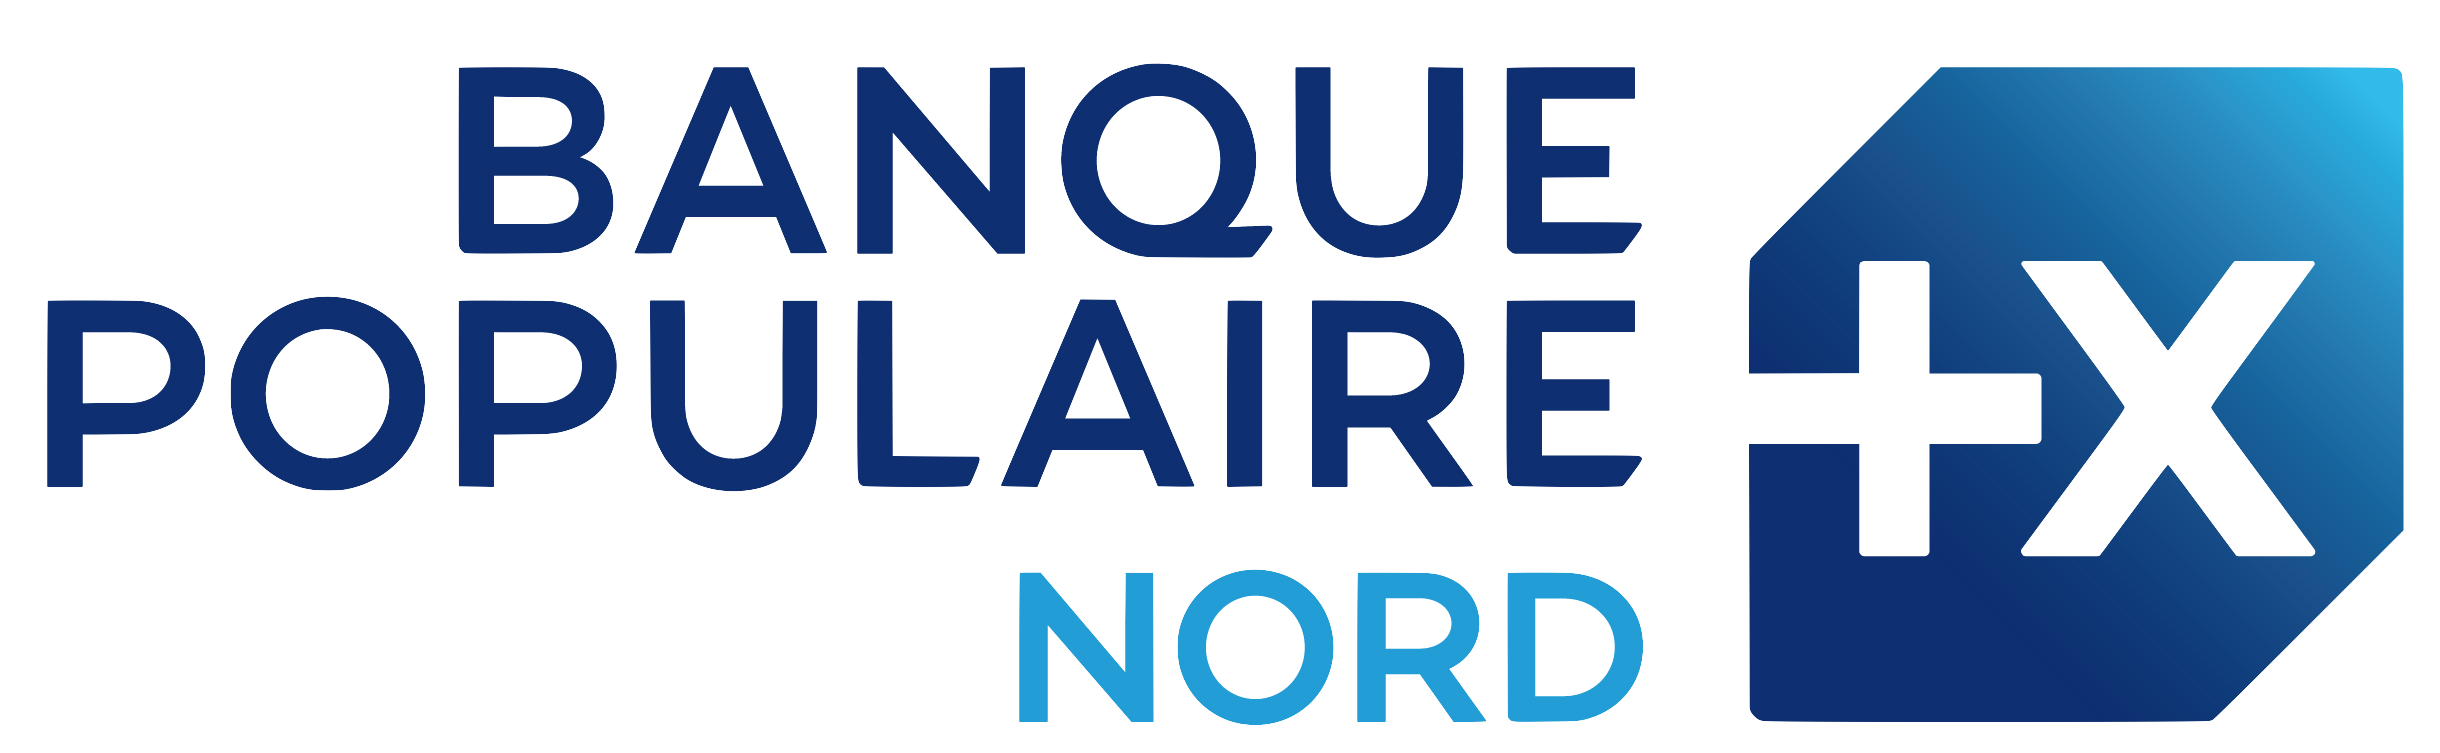 BANQUE POPULAIRE NORD logo